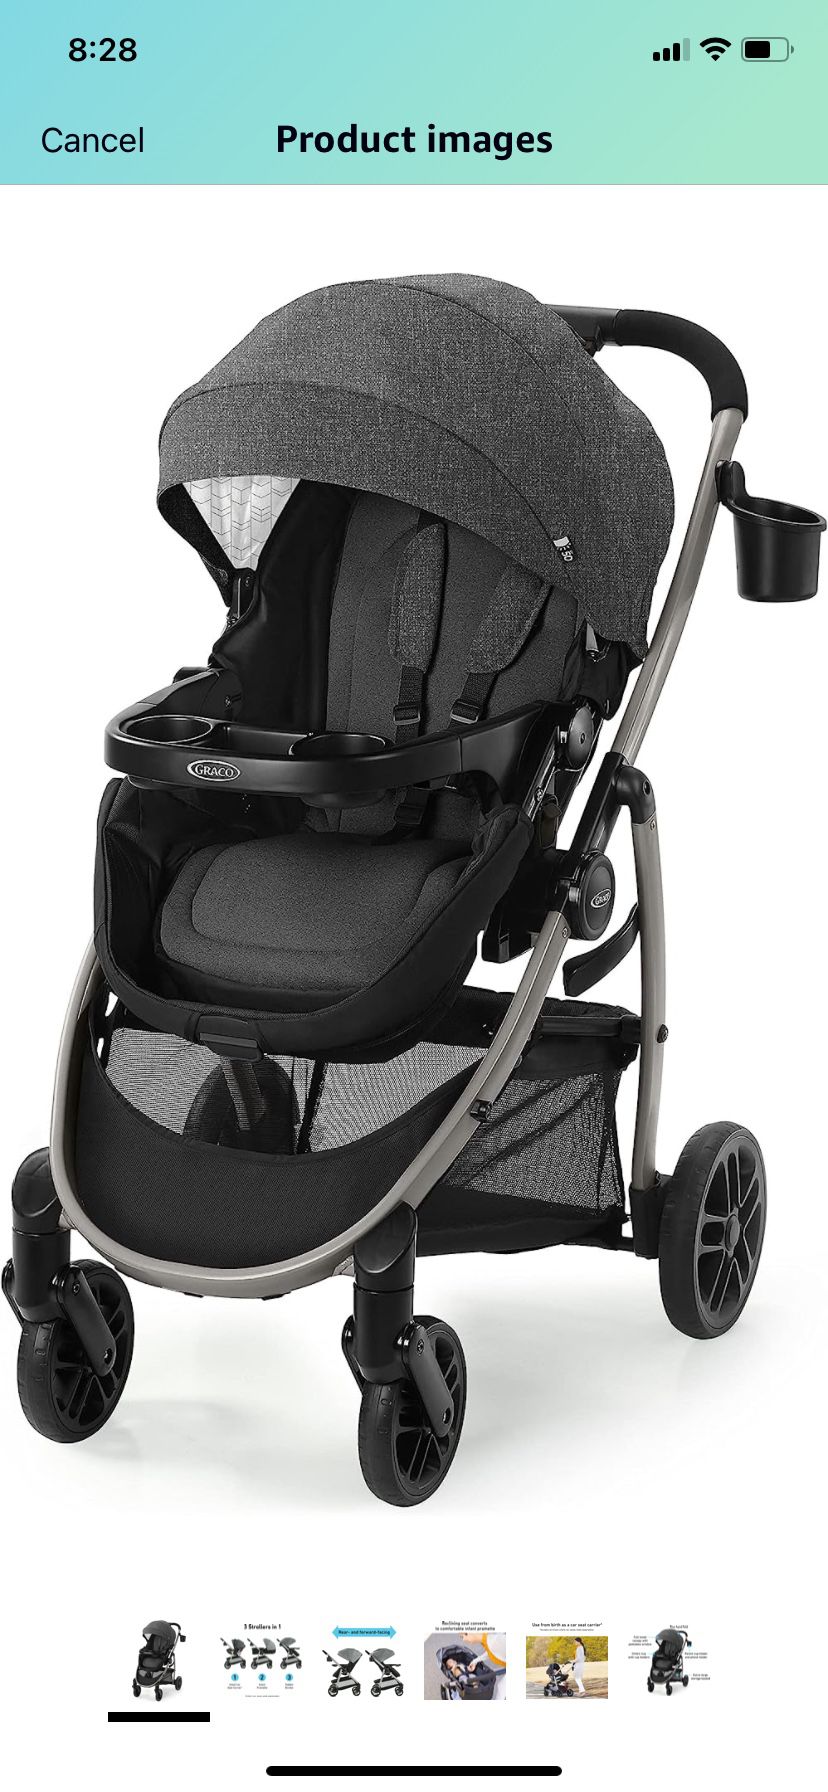 Graco Modes Pramette Stroller, Baby Stroller with True Pram Mode, Reversible Seat, One Hand Fold, Extra Storage, Child Tray, Redmond.  Graco SnugRide 